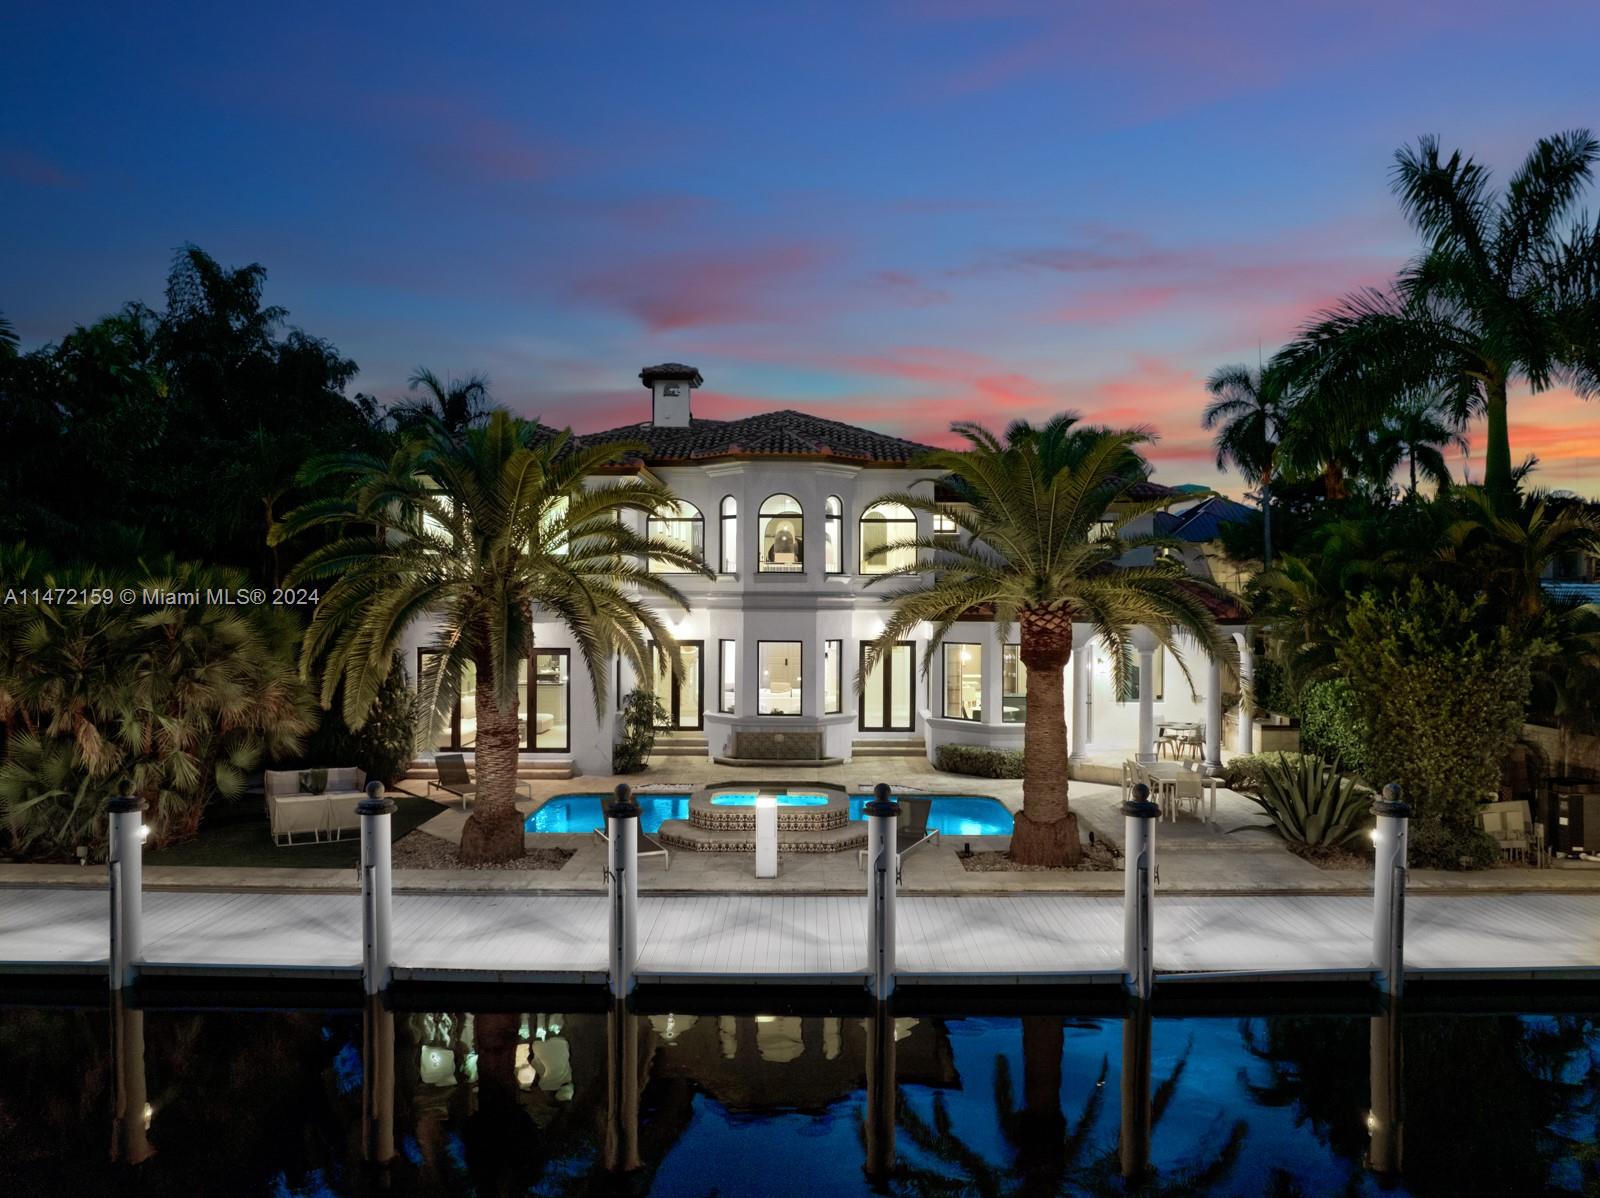 Property for Sale at 168 Fiesta Way, Fort Lauderdale, Broward County, Florida - Bedrooms: 6 
Bathrooms: 6  - $6,390,000